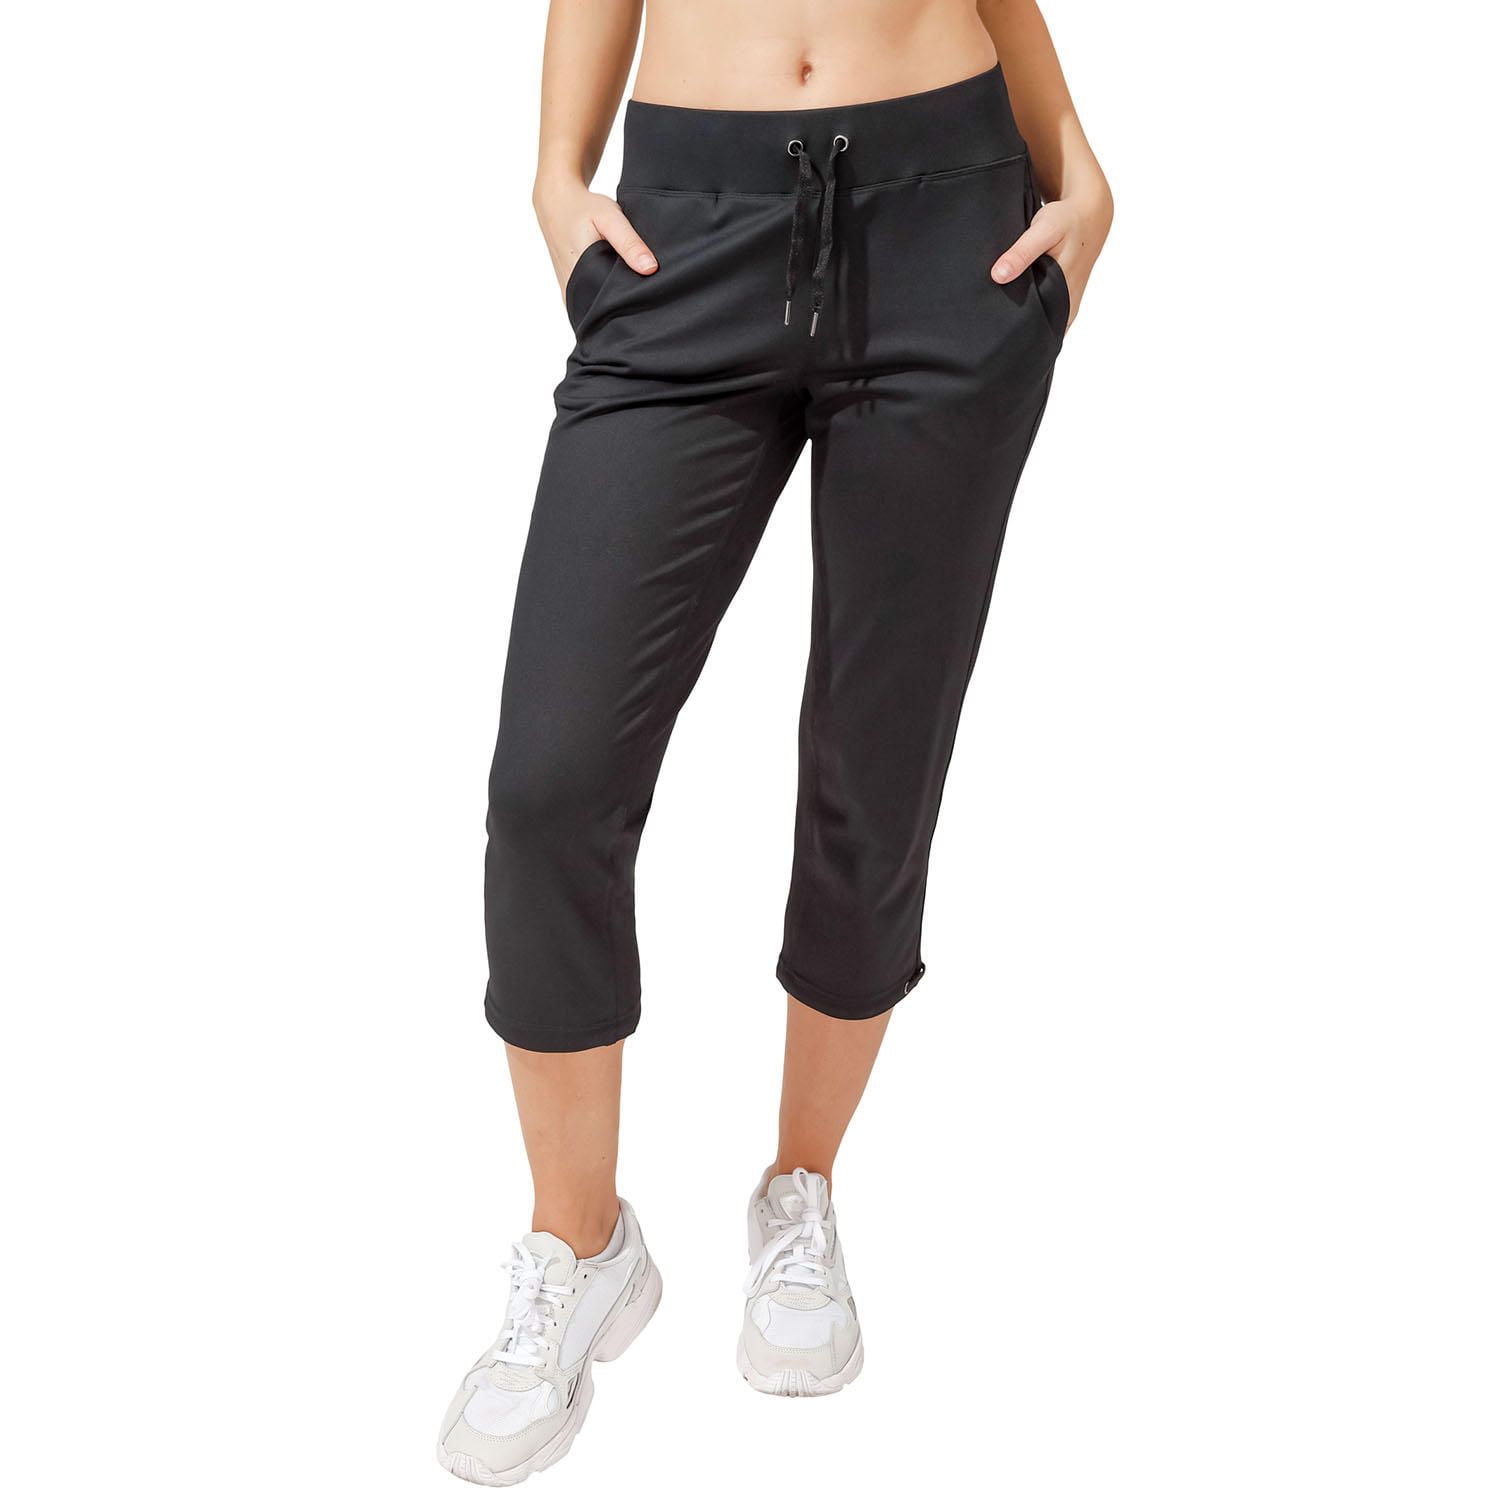 Reflex 90 Degree Women's Elastic Waist Pull On Athletic Travel Capri Pants  (Black, M) 